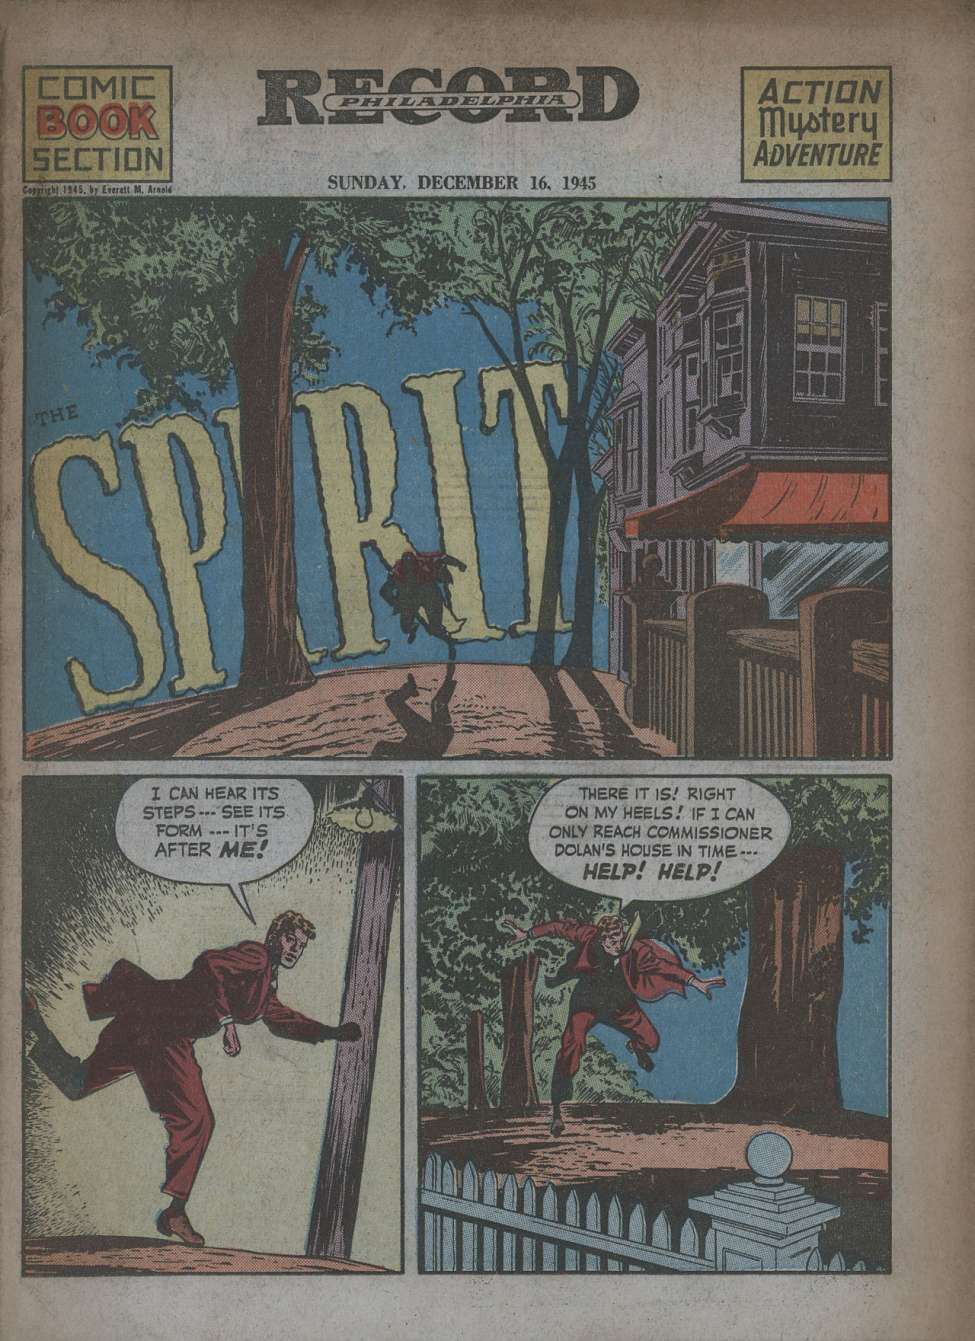 Comic Book Cover For The Spirit (1945-12-16) - Philadelphia Record